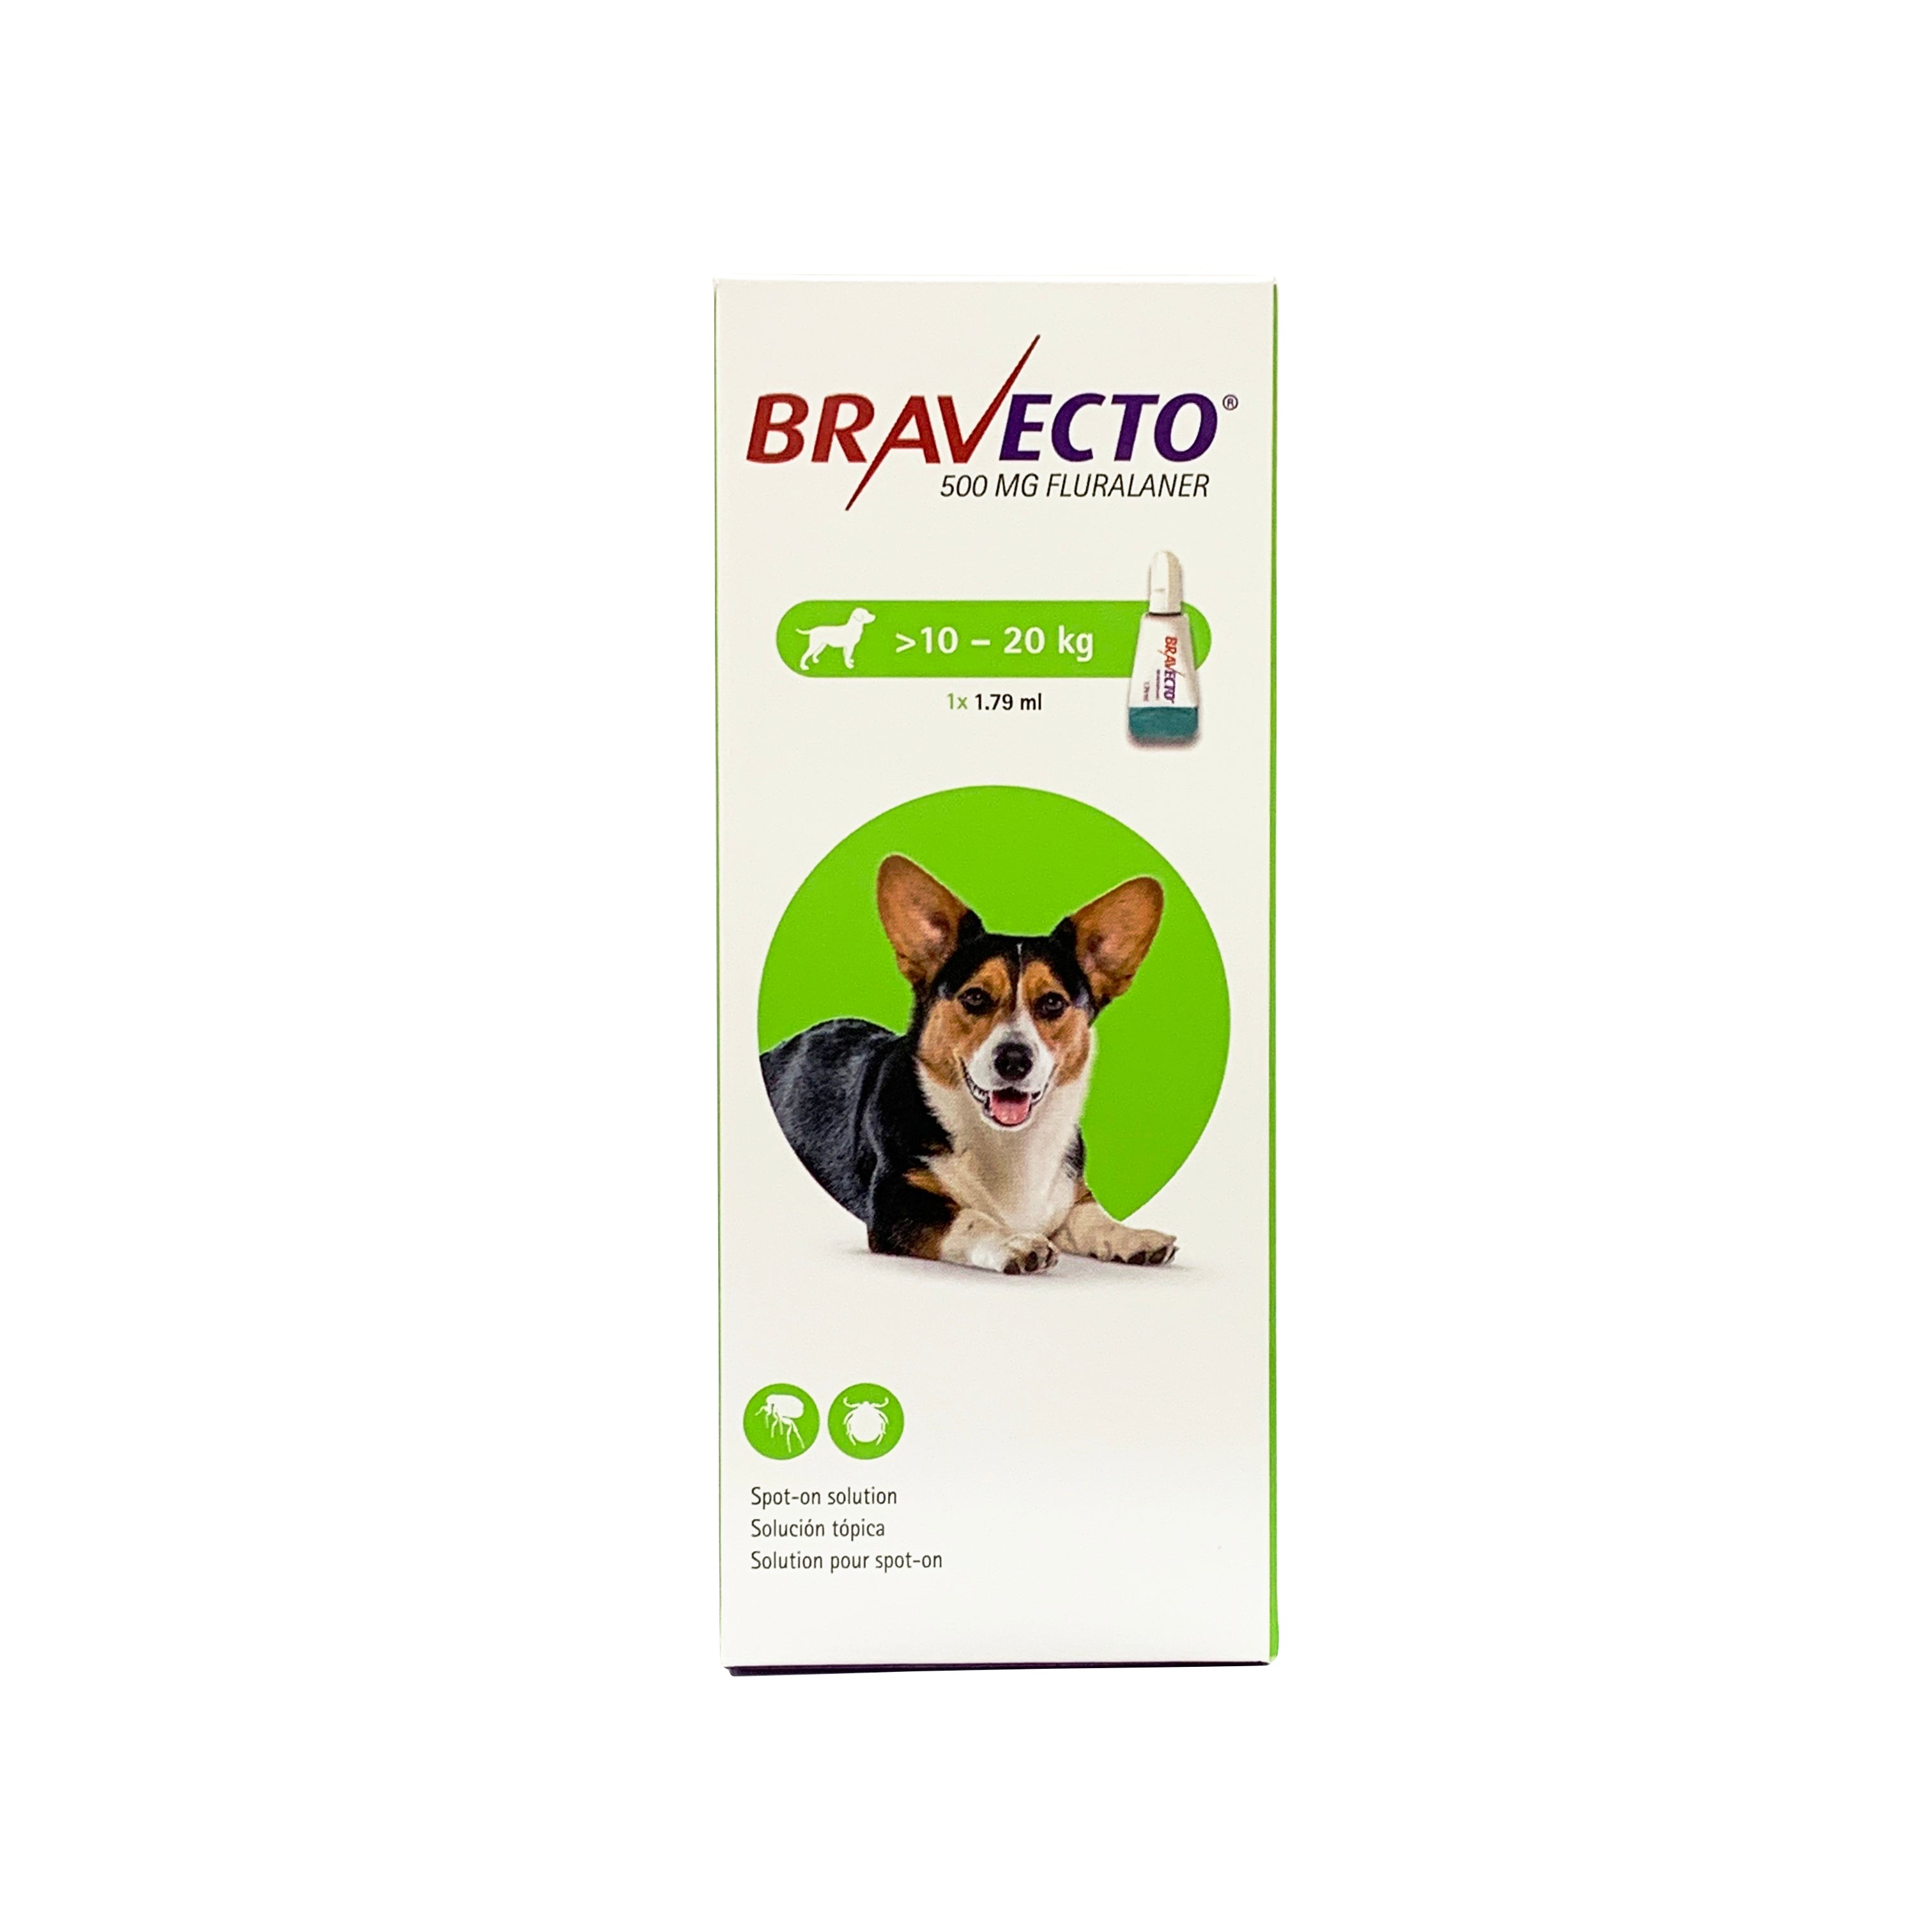 Bravecto Flea & Tick Spot On Solution For Dogs (10kg - 20kg)